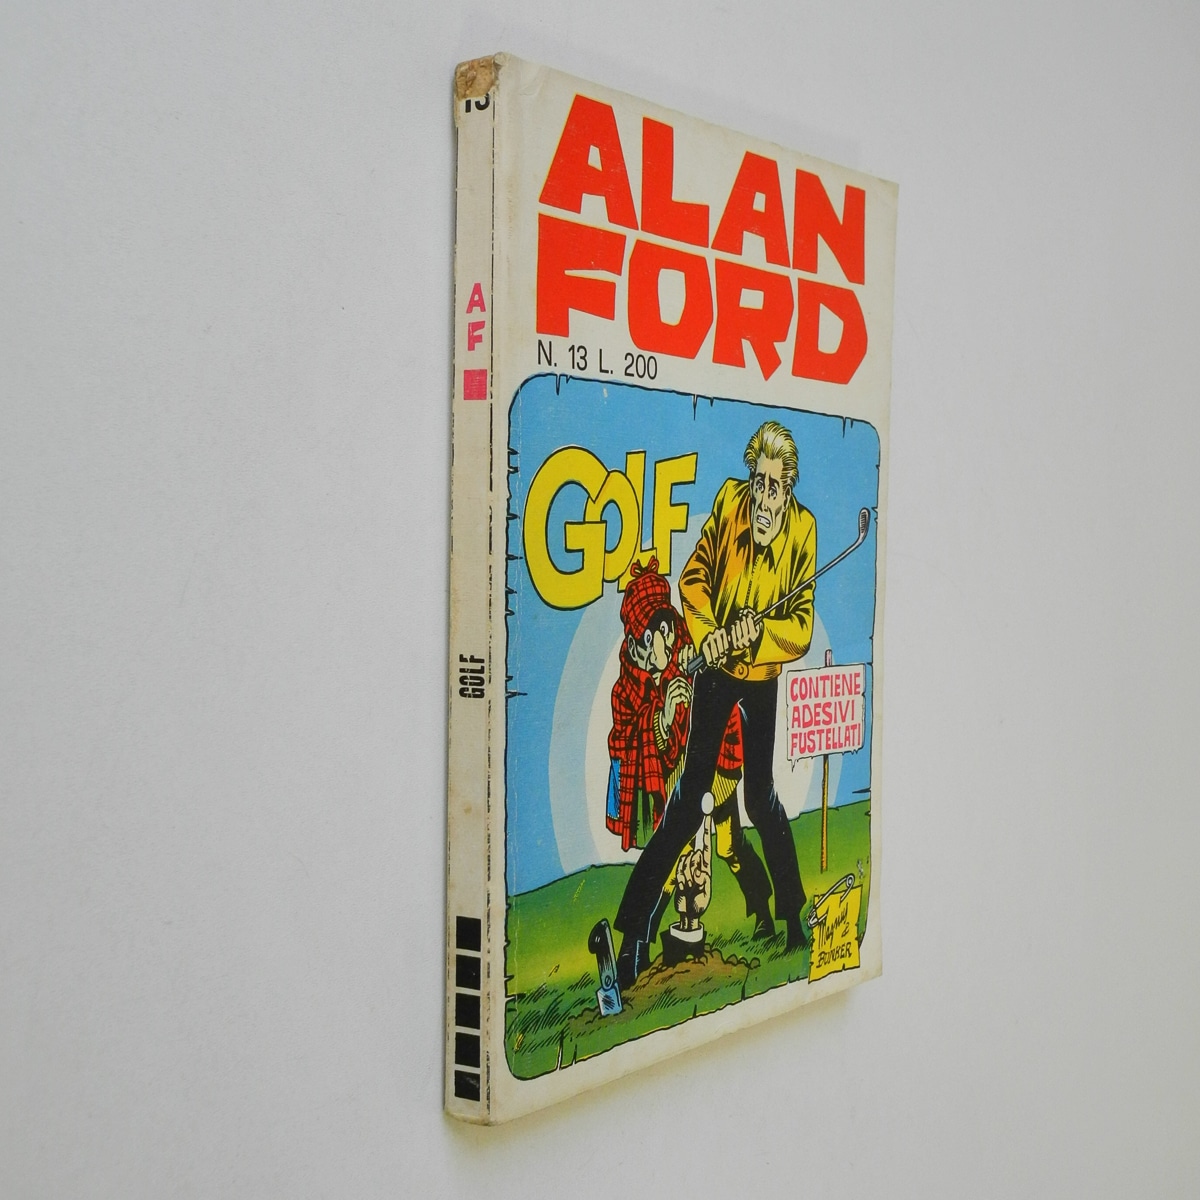 Alan Ford n. 13 con Adesivi Golf